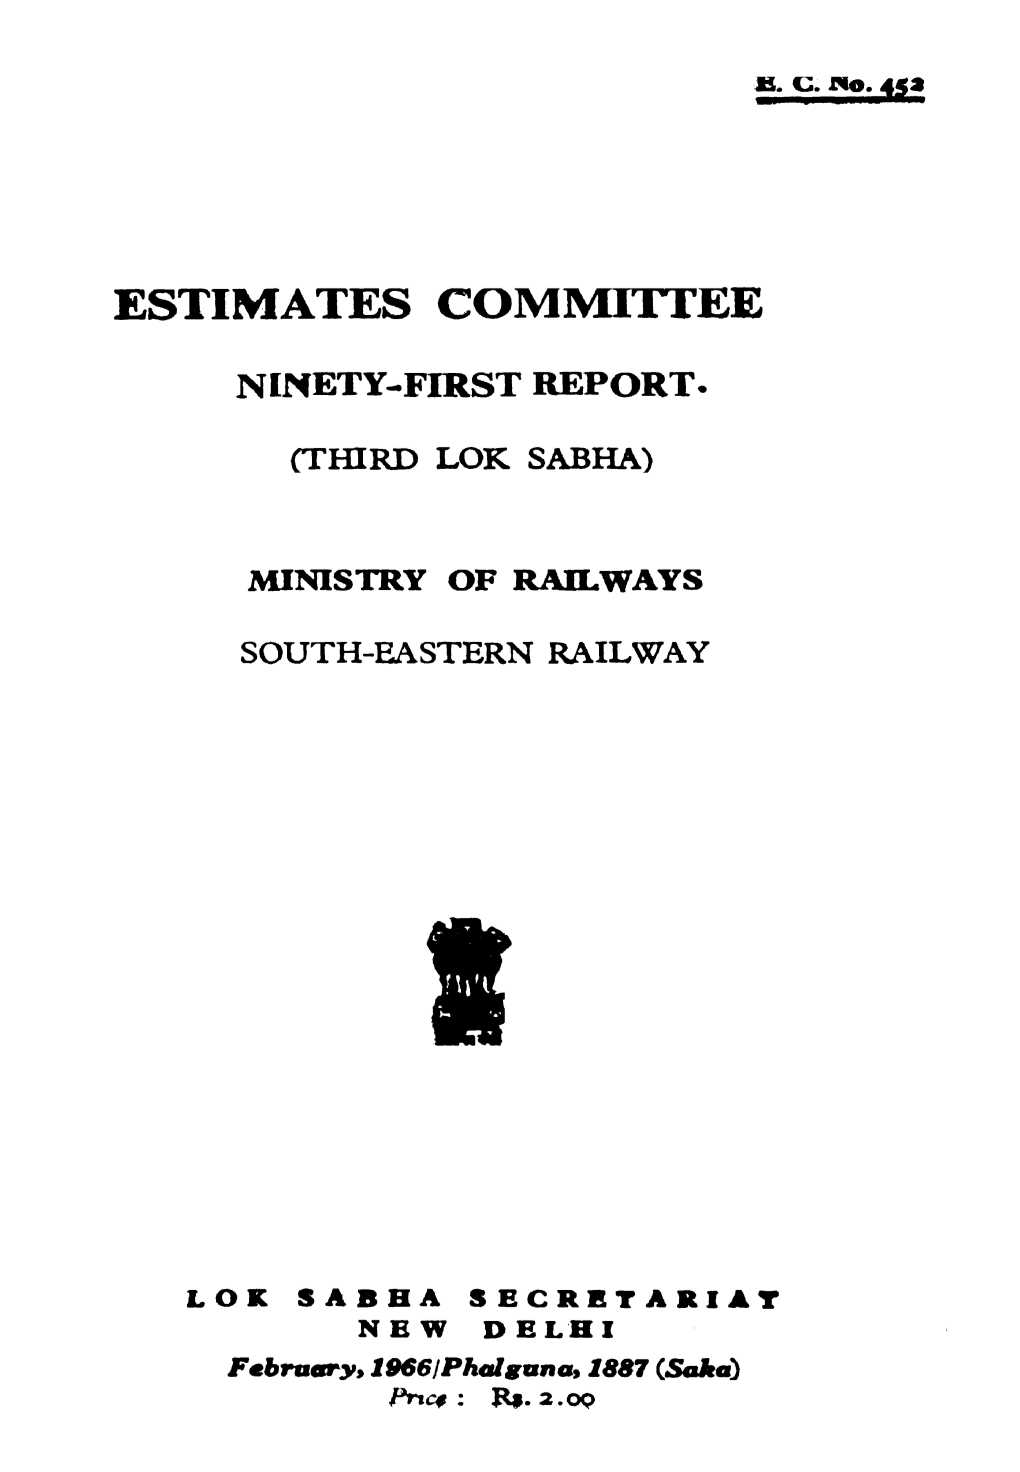 Estimates Committee